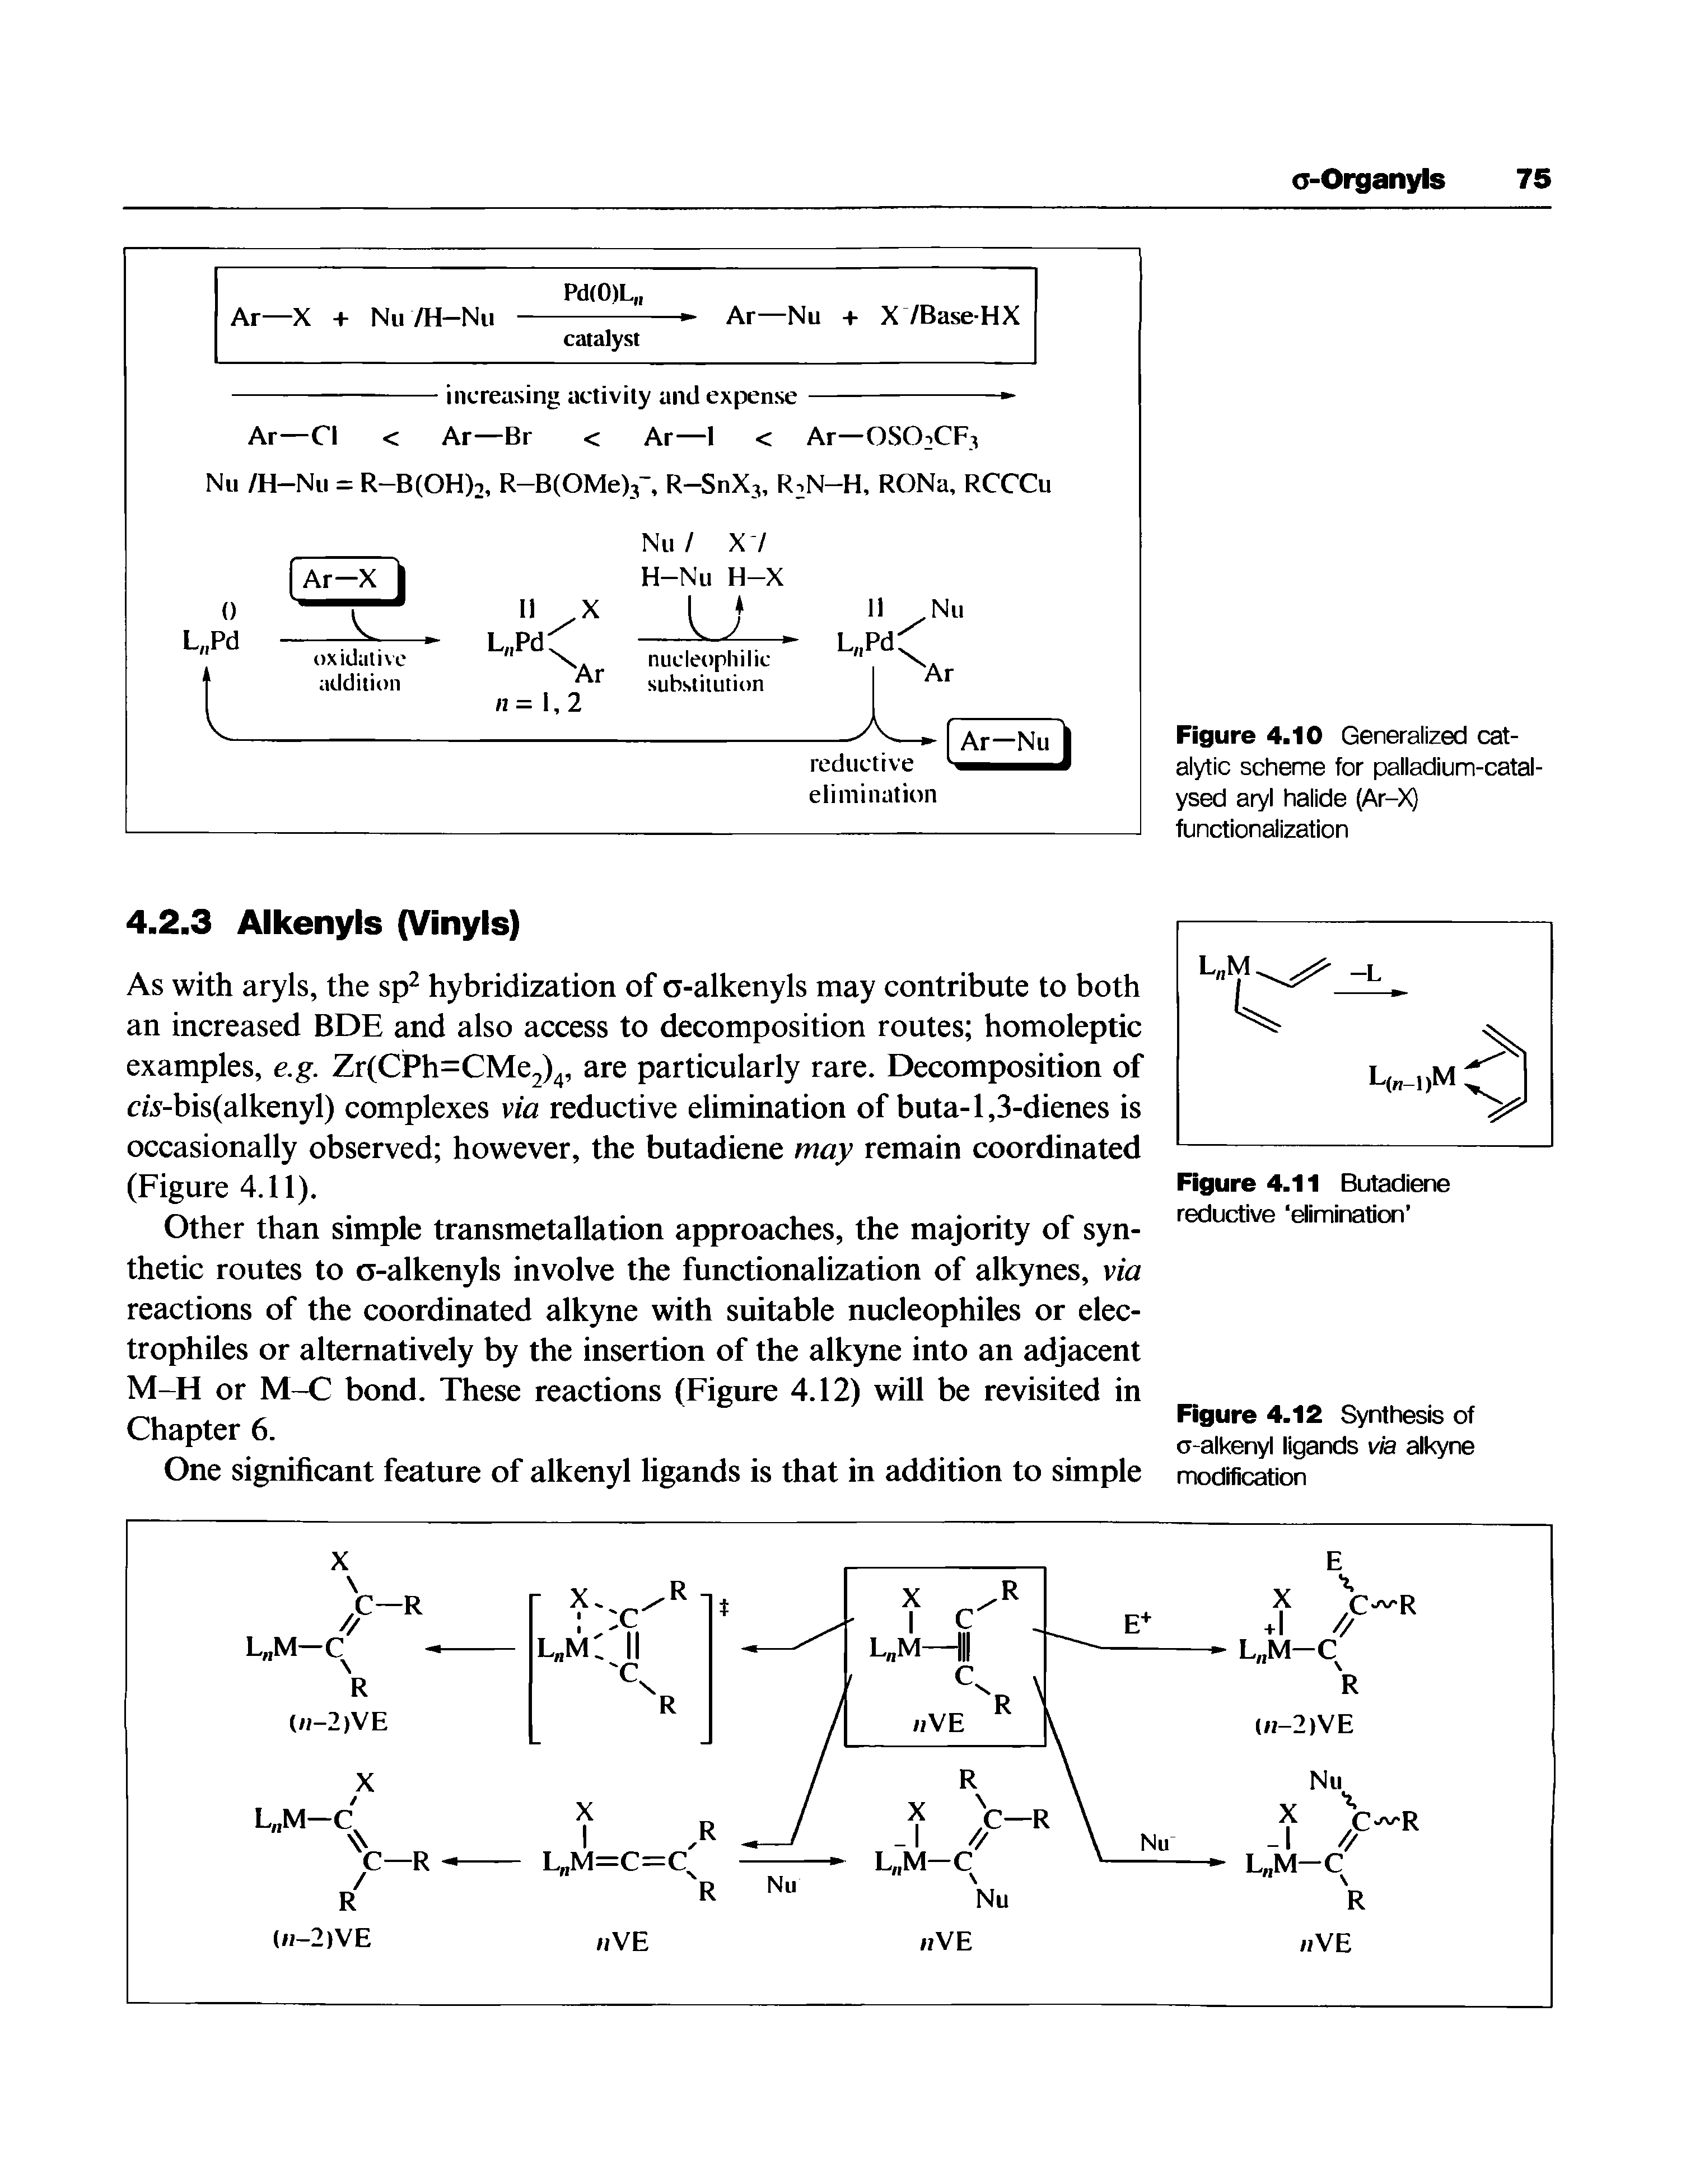 Figure 4.10 Generalized catalytic scheme for palladium-catalysed aryl halide (Ar-X) functionalization...